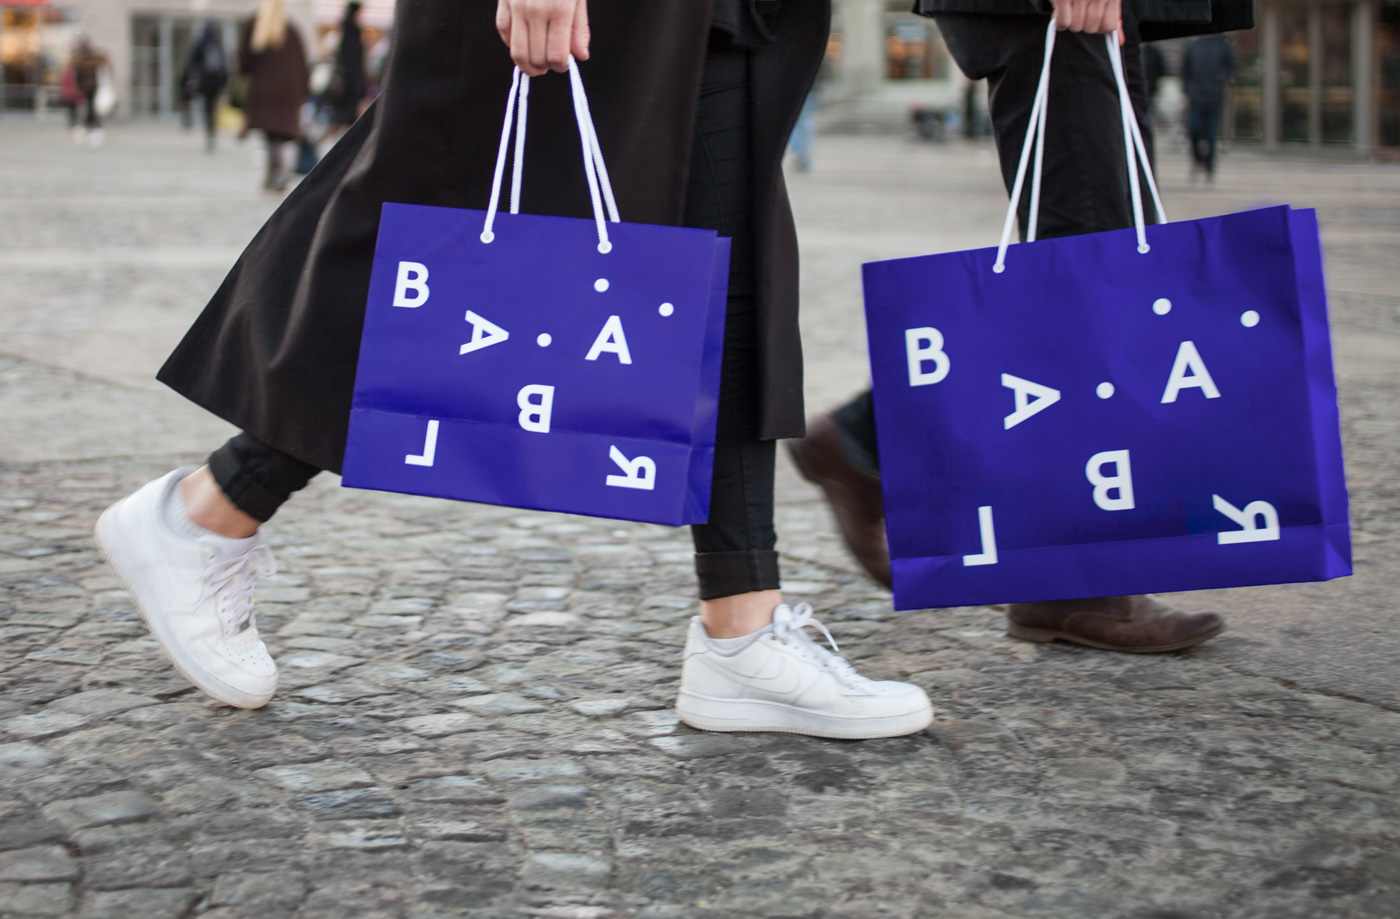 Brand identity and bags by Swedish studio BVD for Blå Bär, an Osaka-based retailer of Scandinavian goods